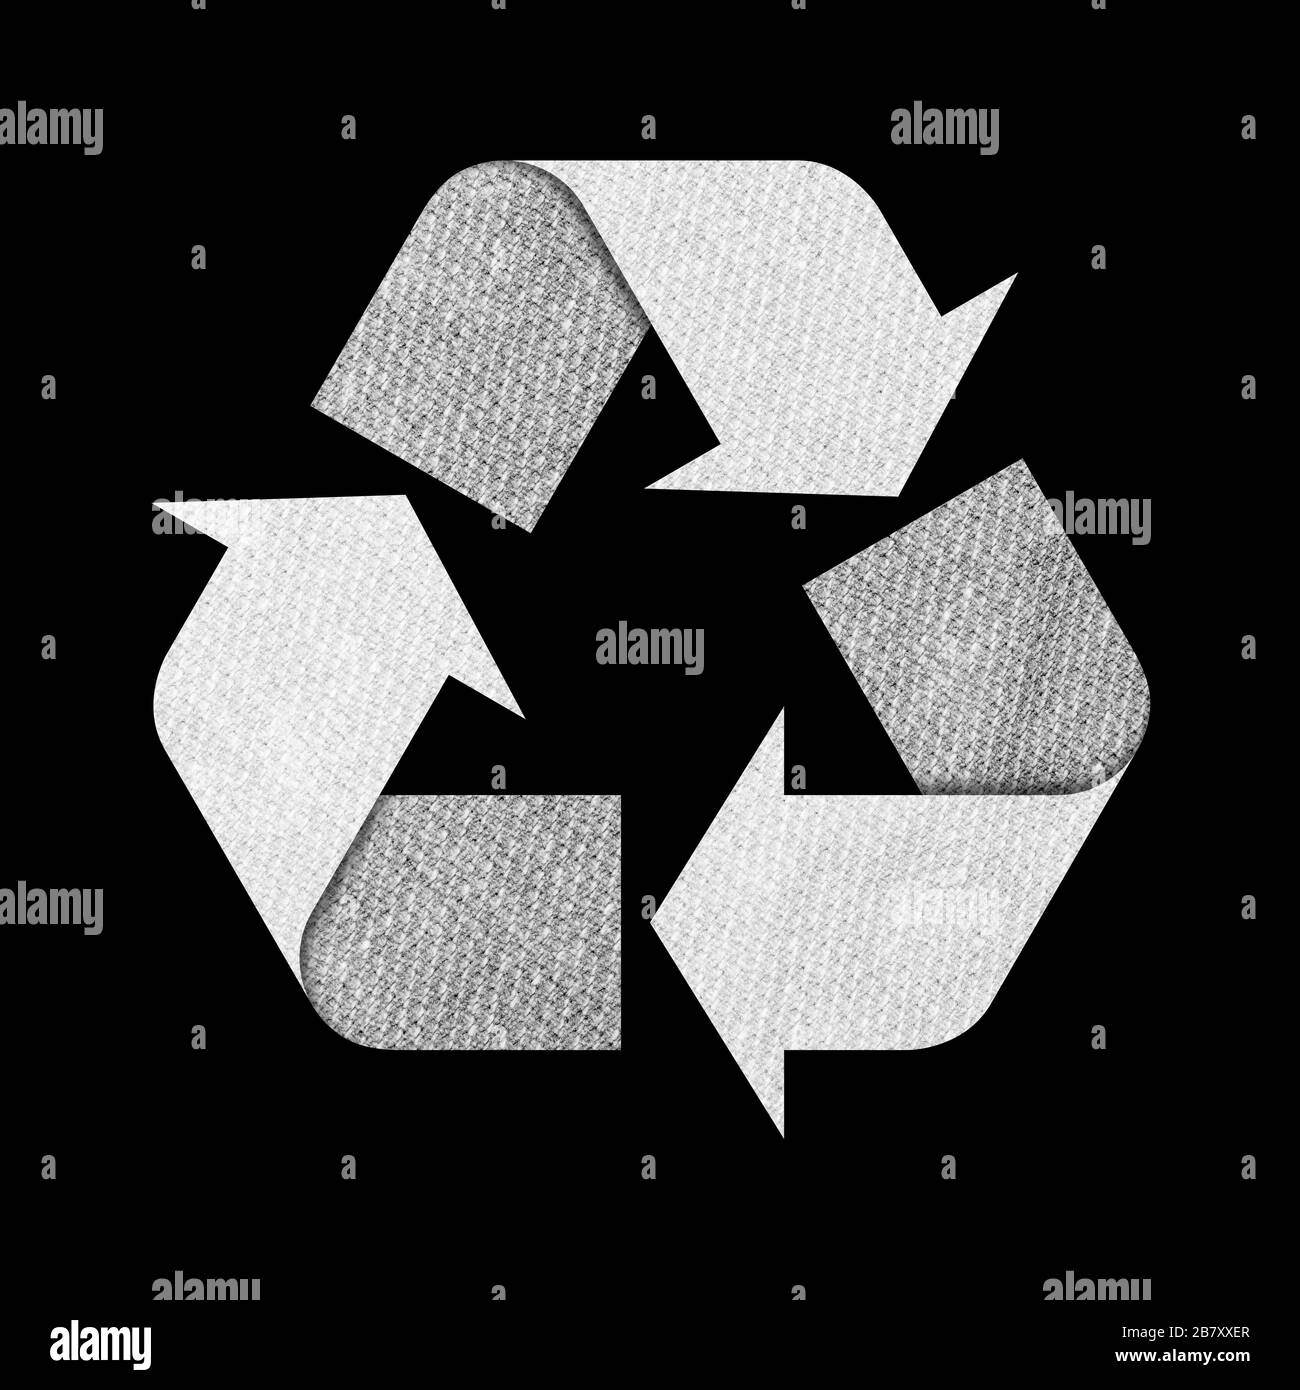 Recycle, reduce, reuse icon symbol logo. Stock Photo